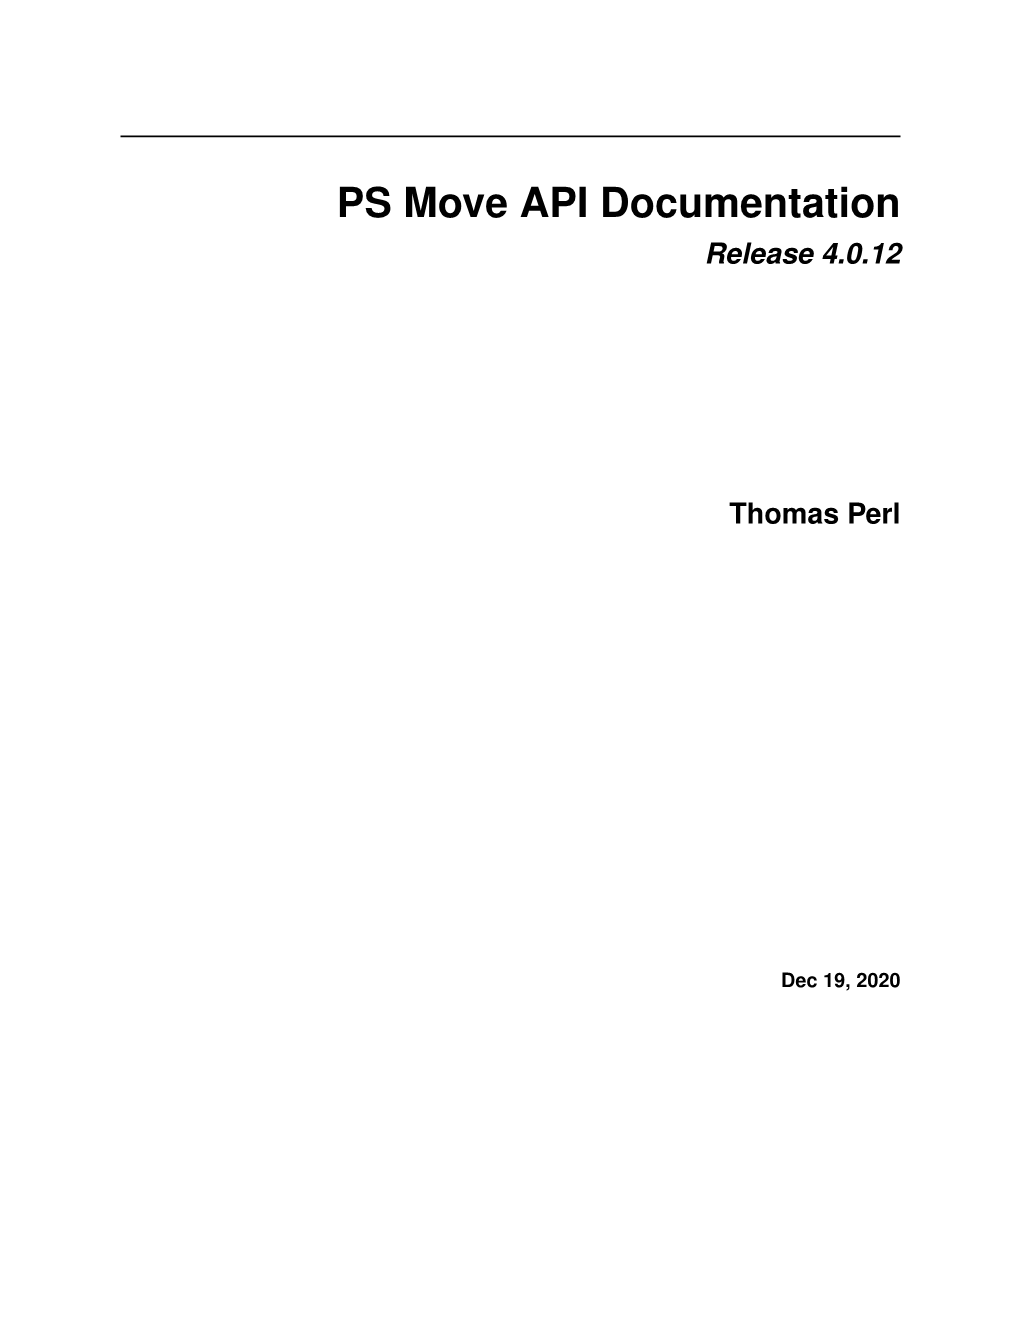 PS Move API Documentation Release 4.0.12